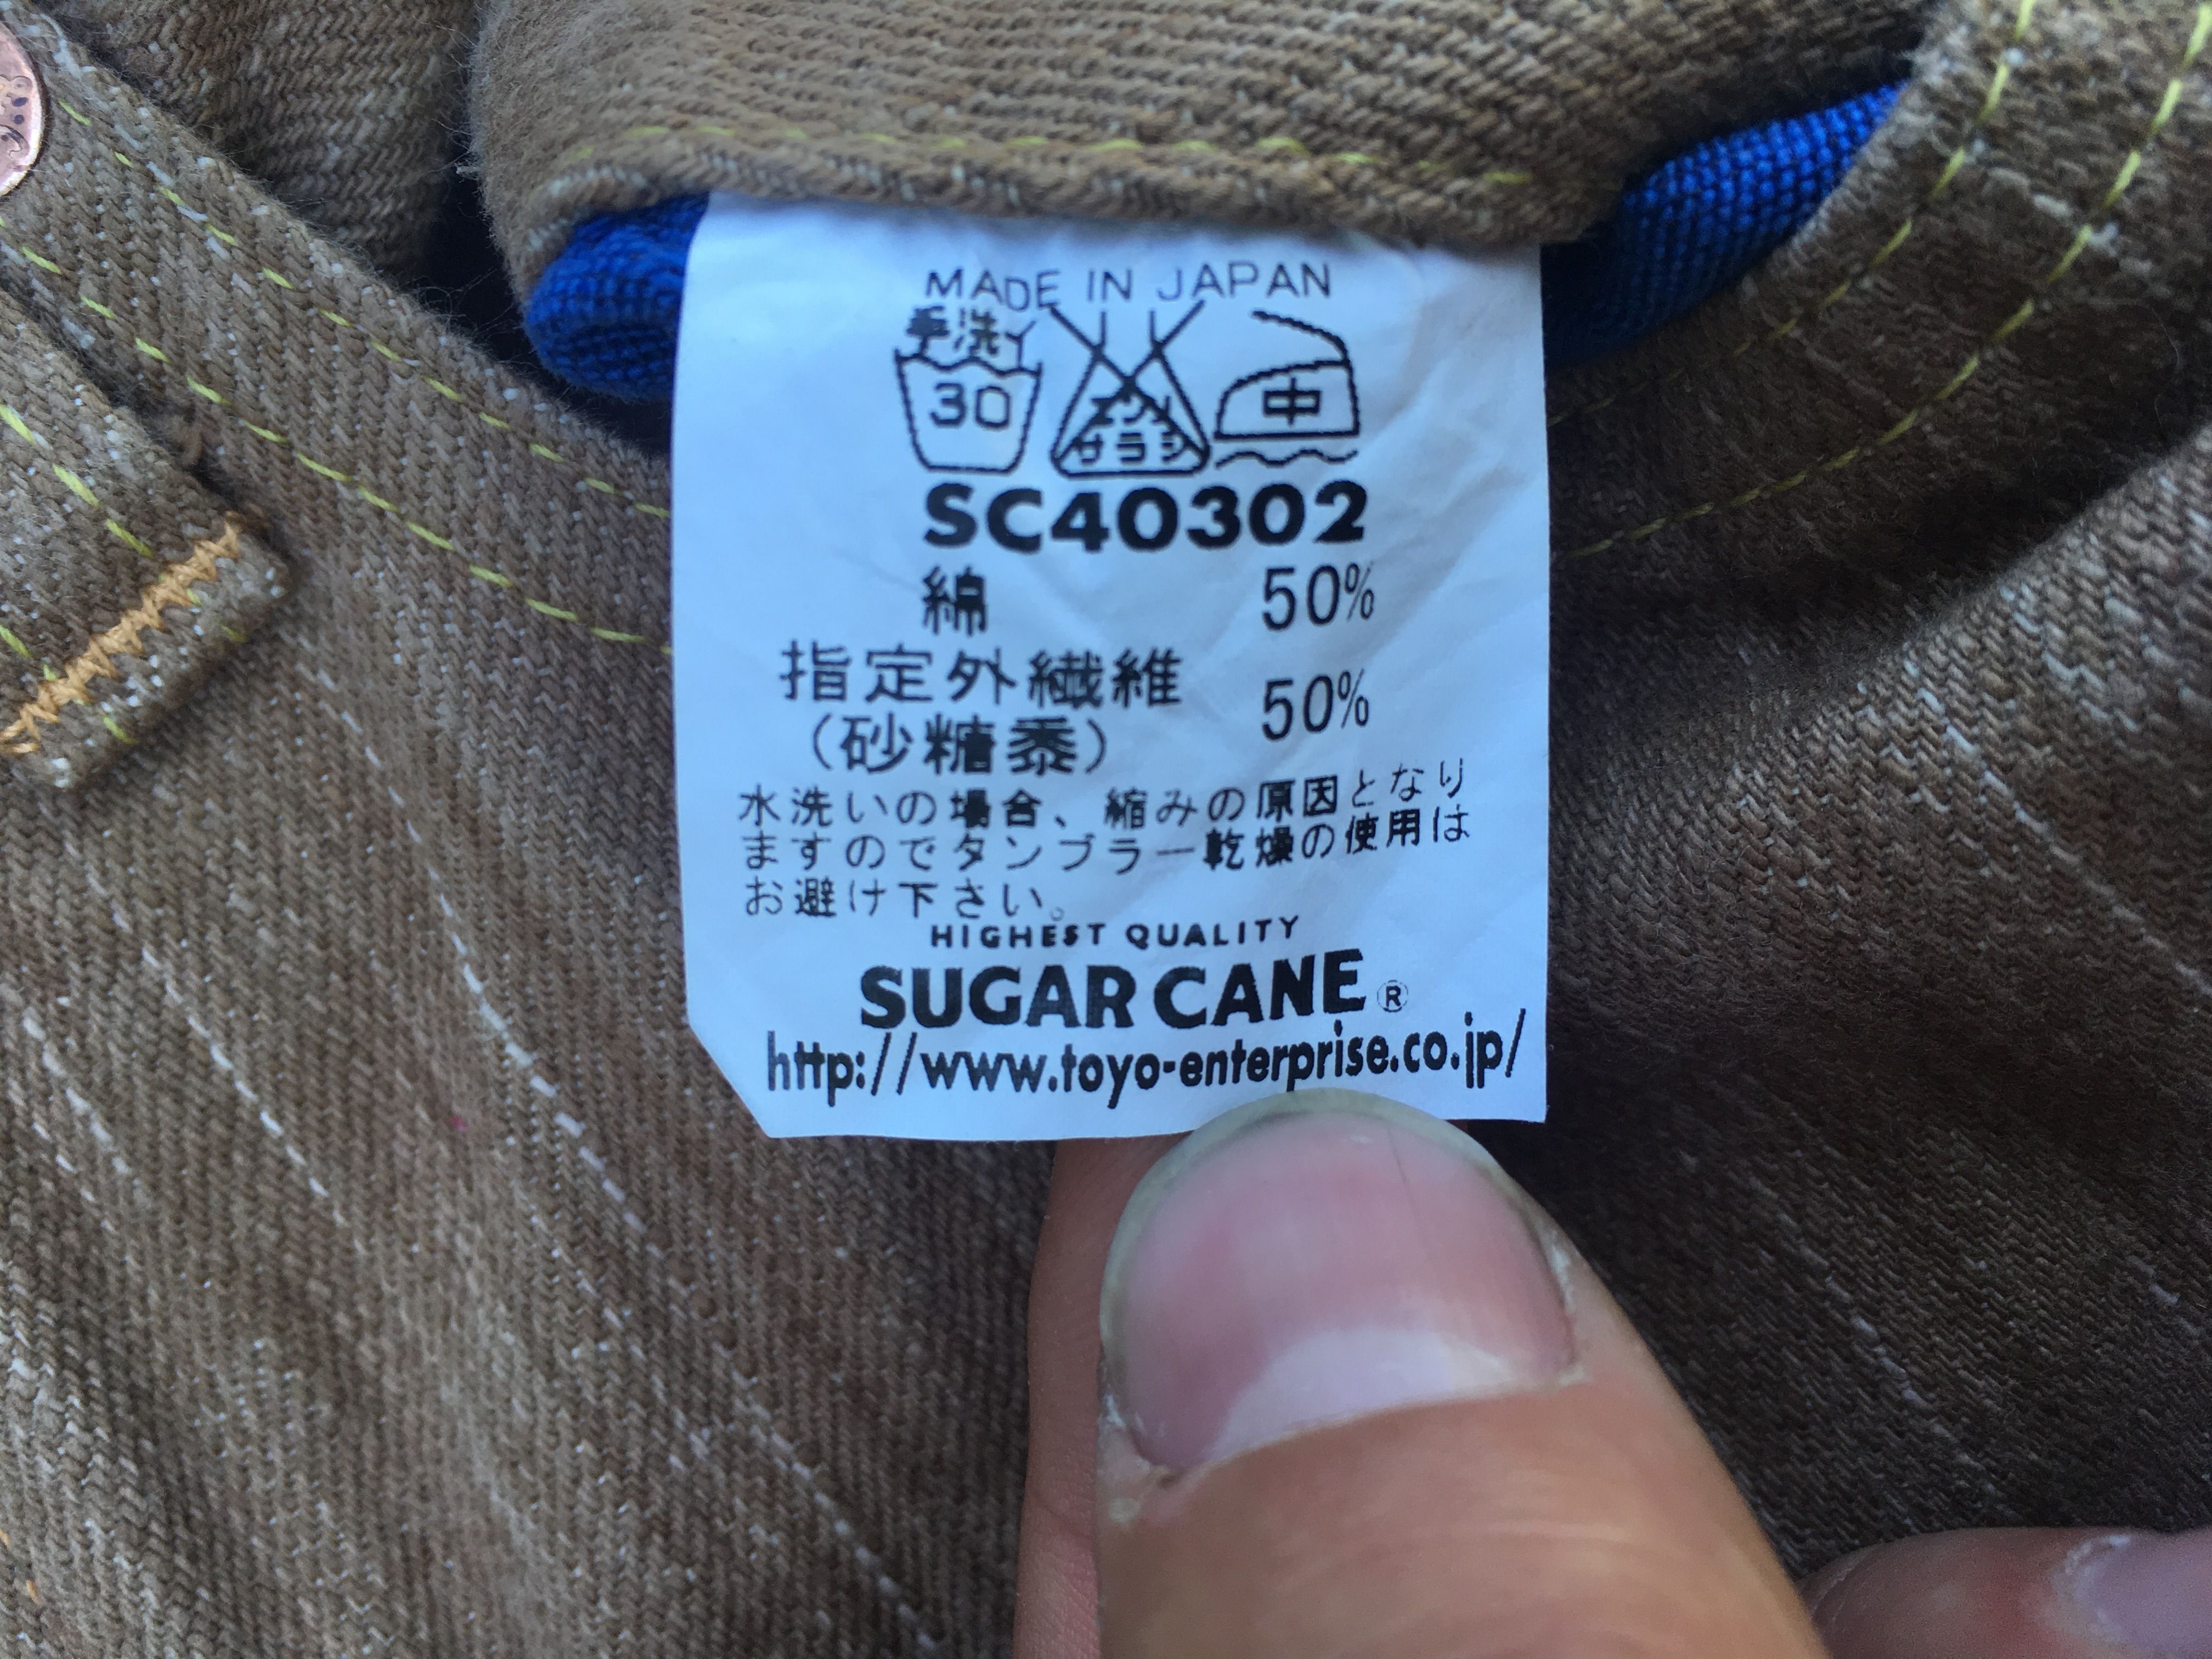 Sugar Cane NOS Sugar Cane lot 302 persimmon Okinawa Size US 32 / EU 48 - 9 Thumbnail